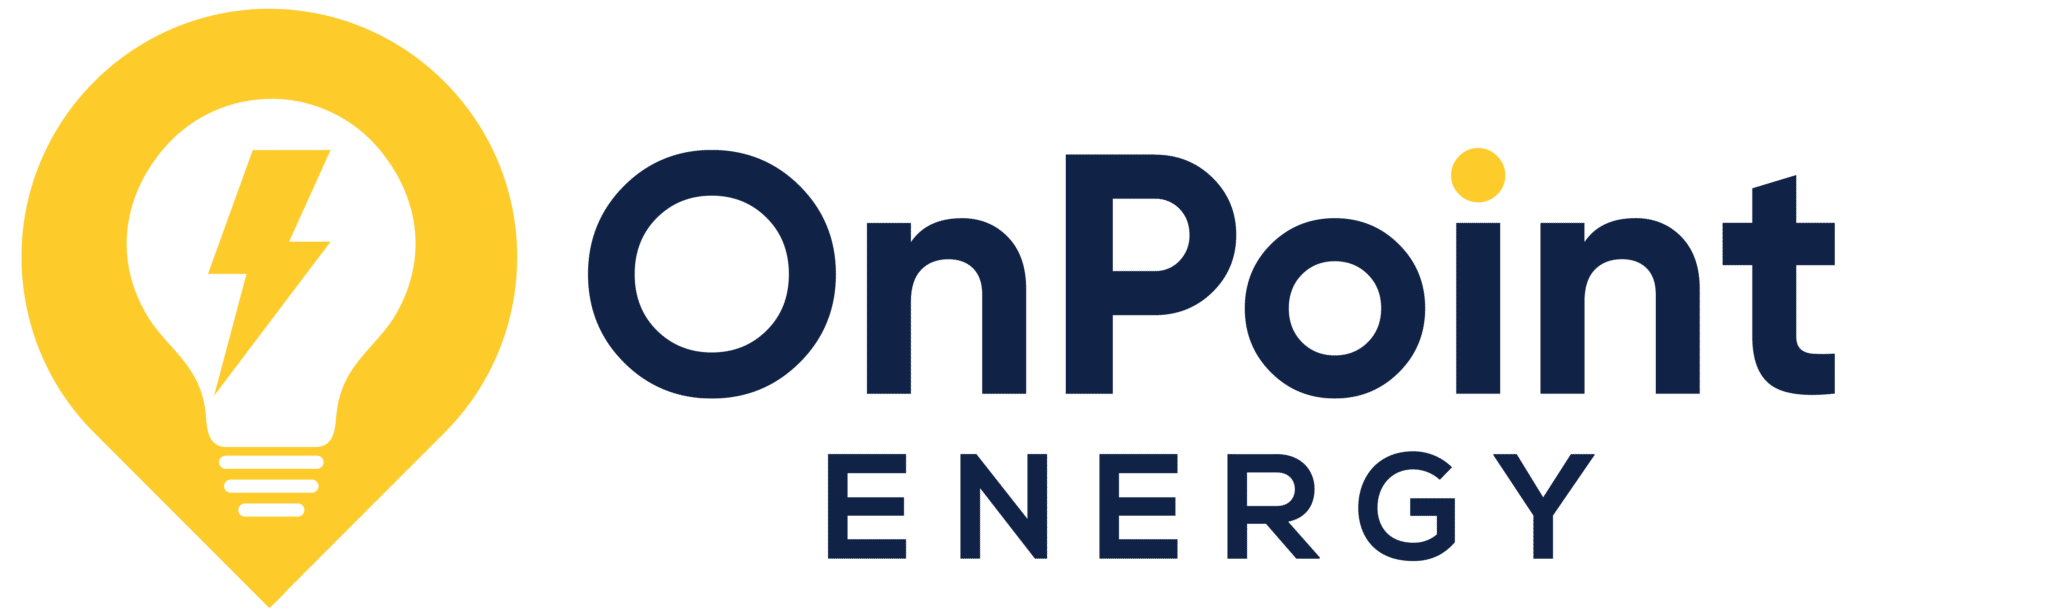 OnPoint Energy Case Study